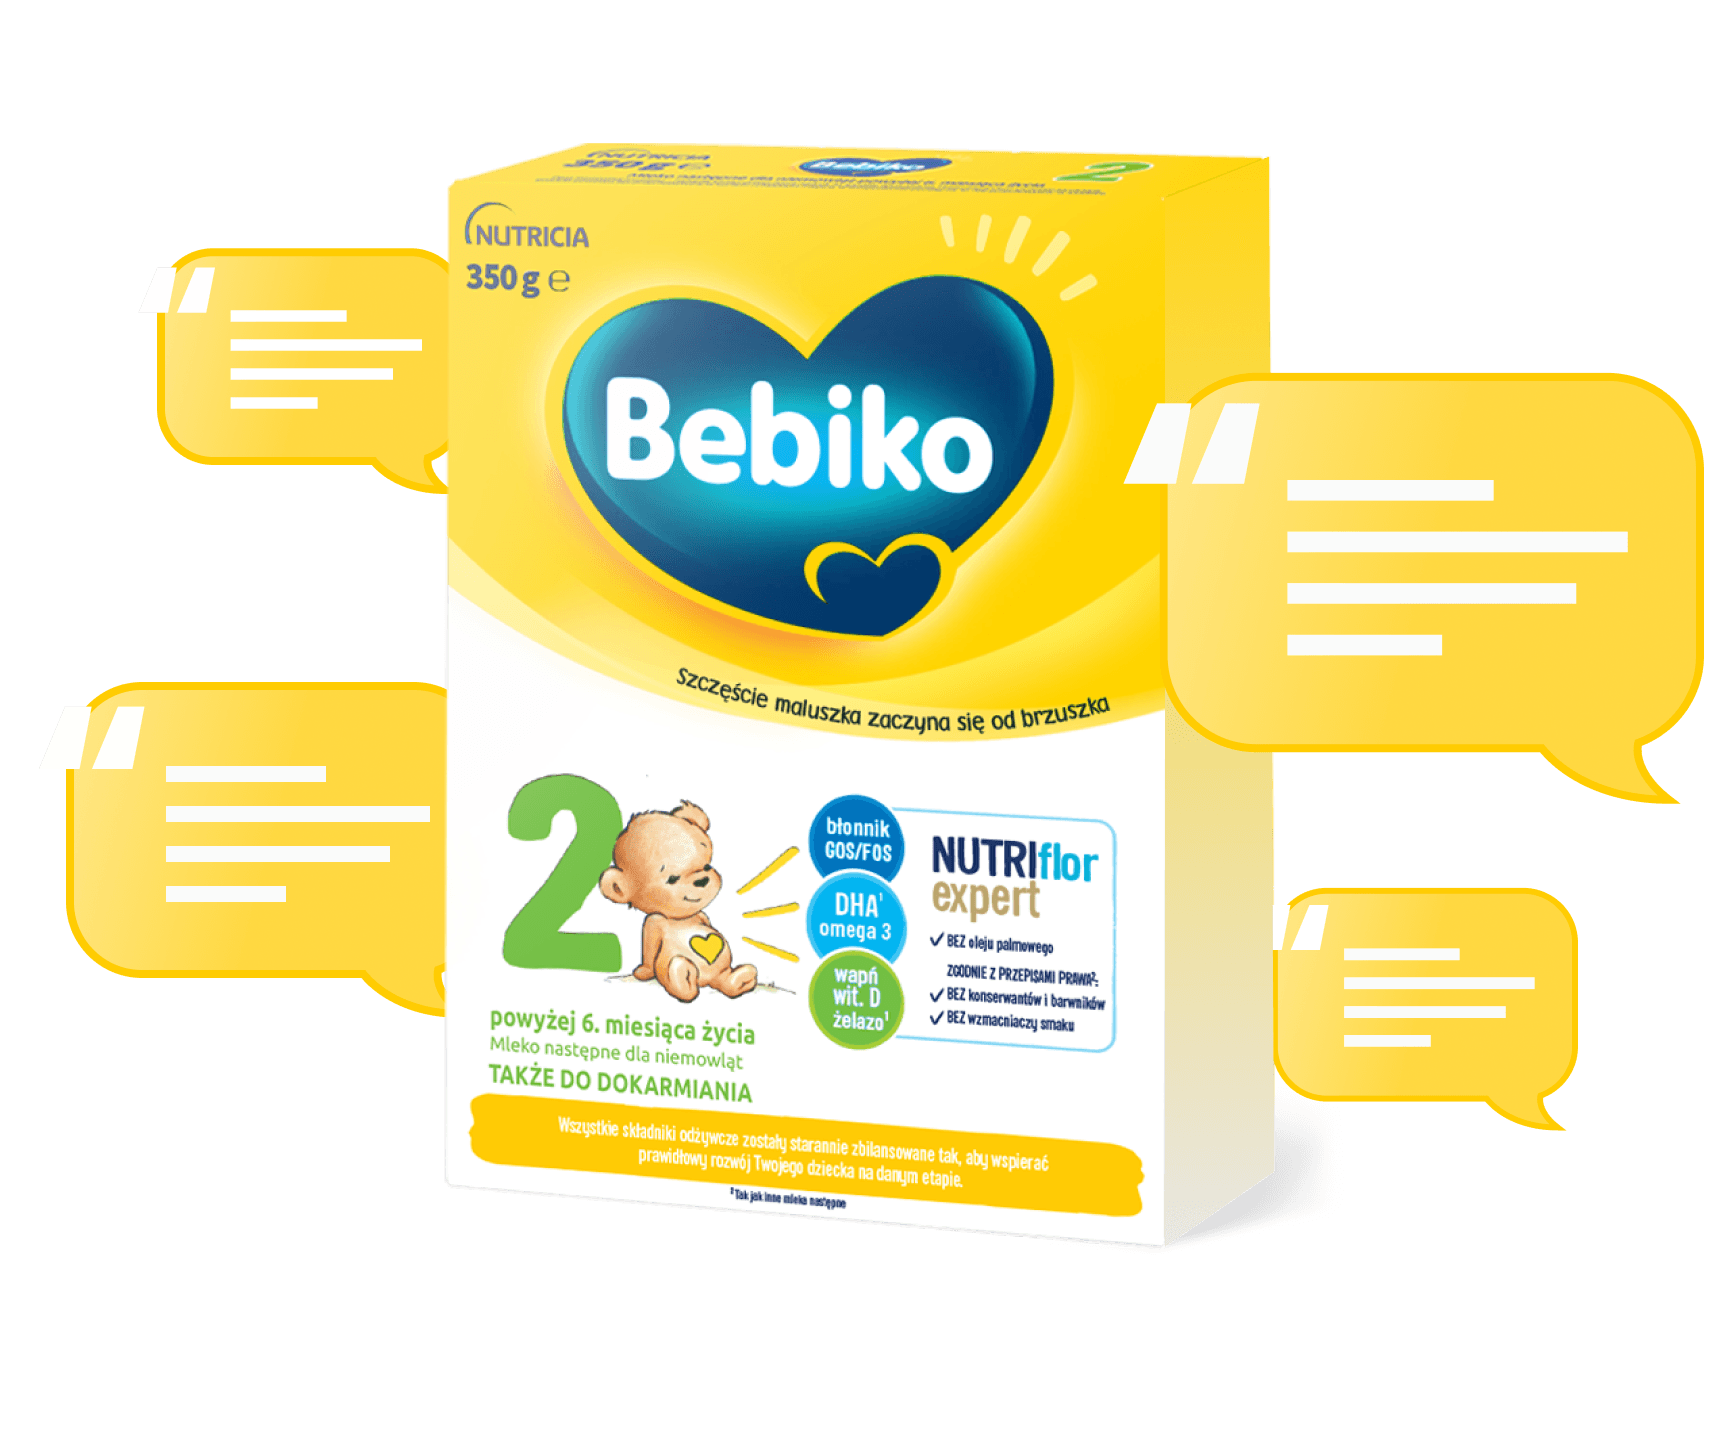 Bebiko-2-Nutriflor-Microbanner.png